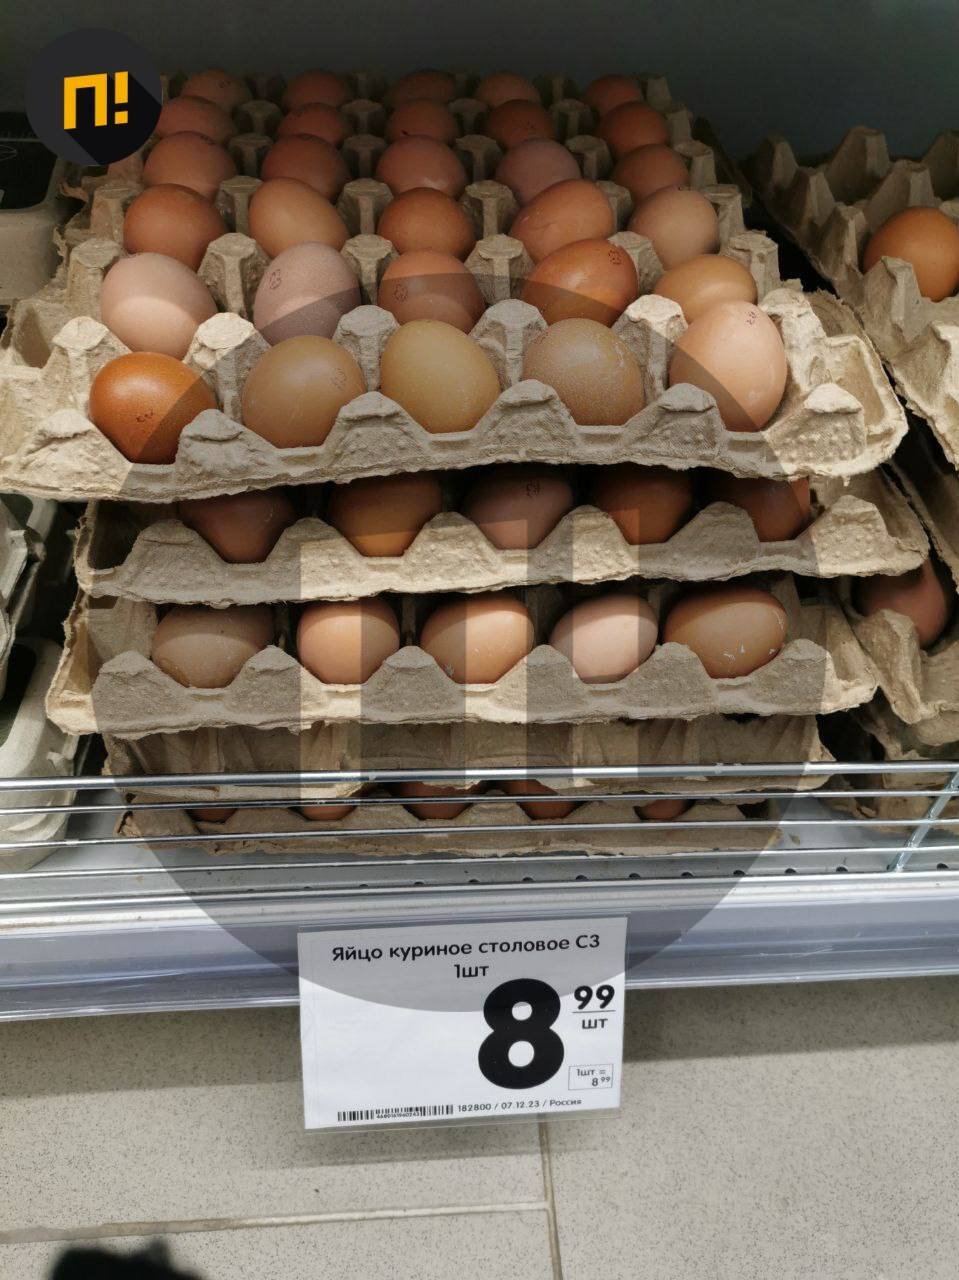 Продажа яиц поштучно в Москве. Фото: «Подъем»